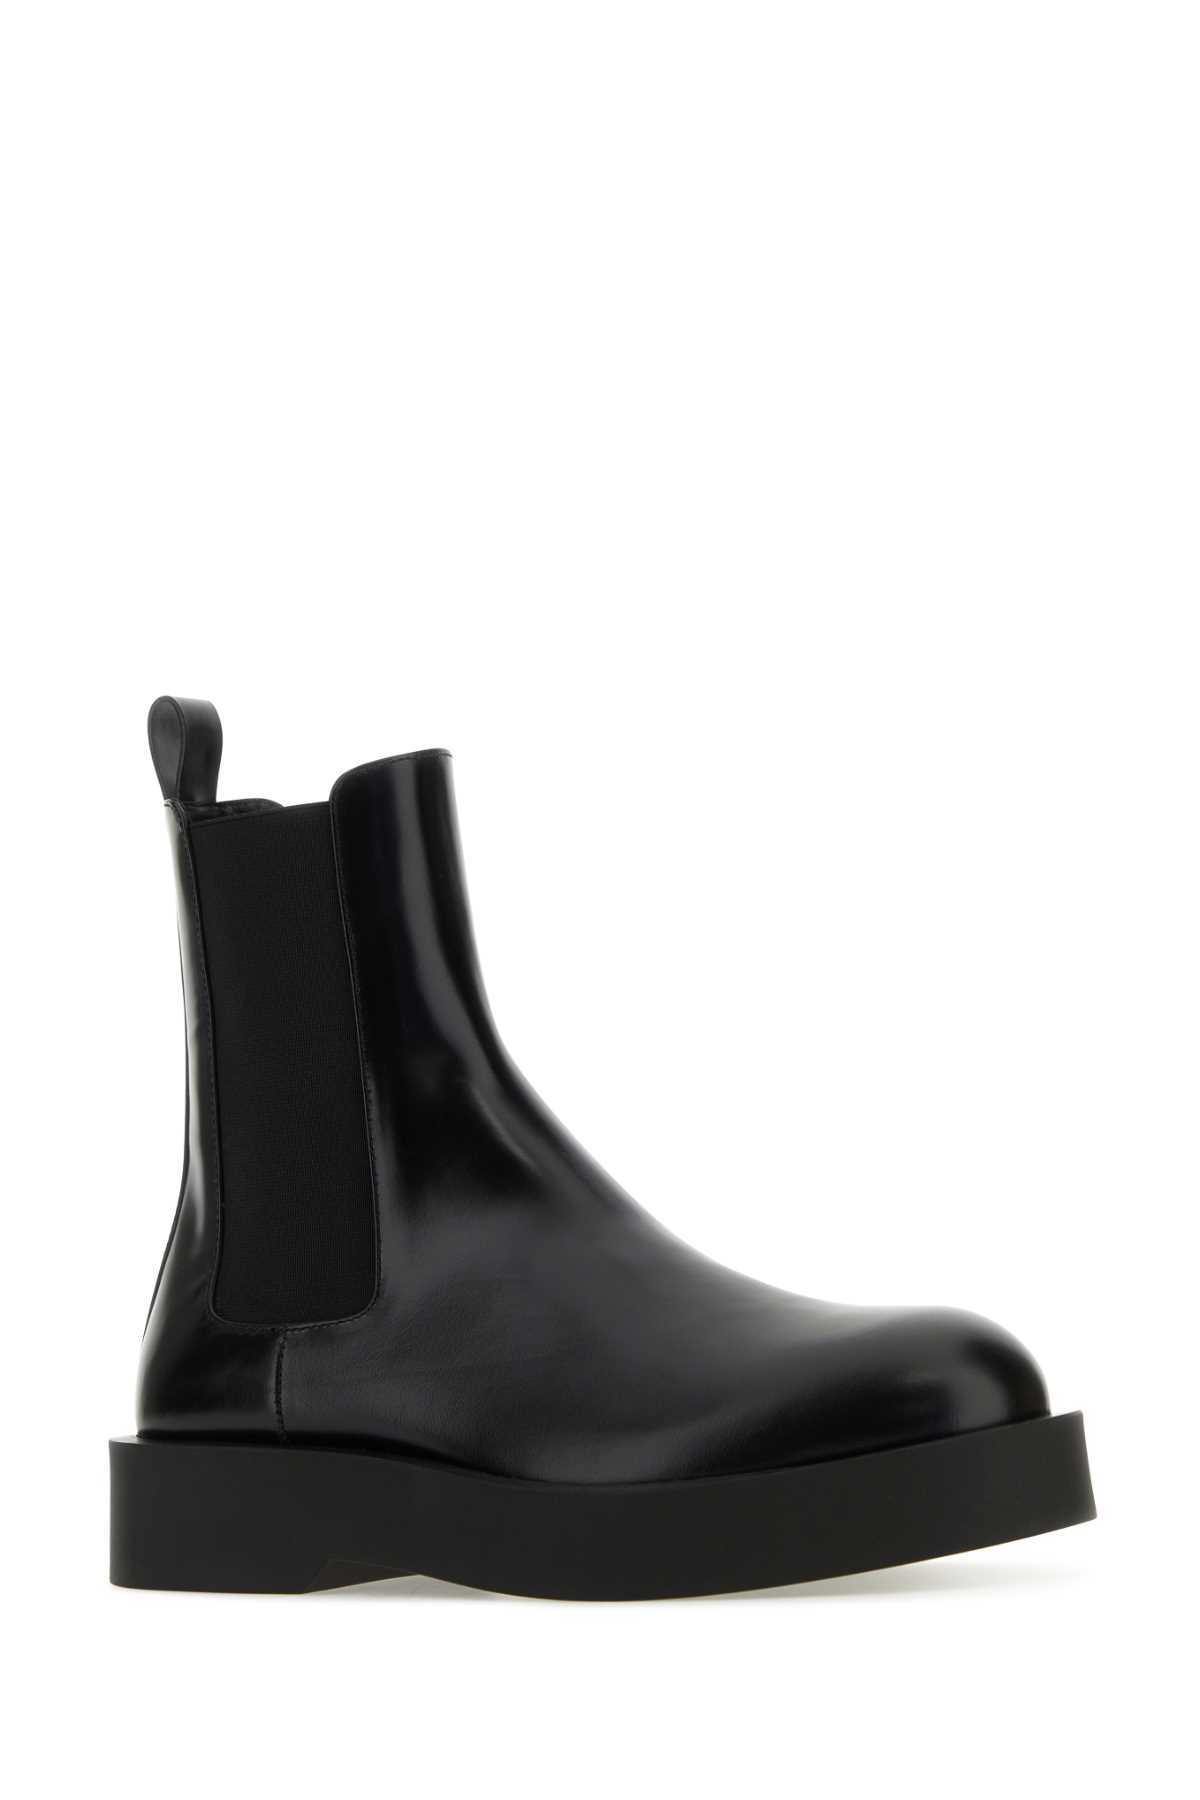 Jil Sander Black Leather Ankle Boots In 001